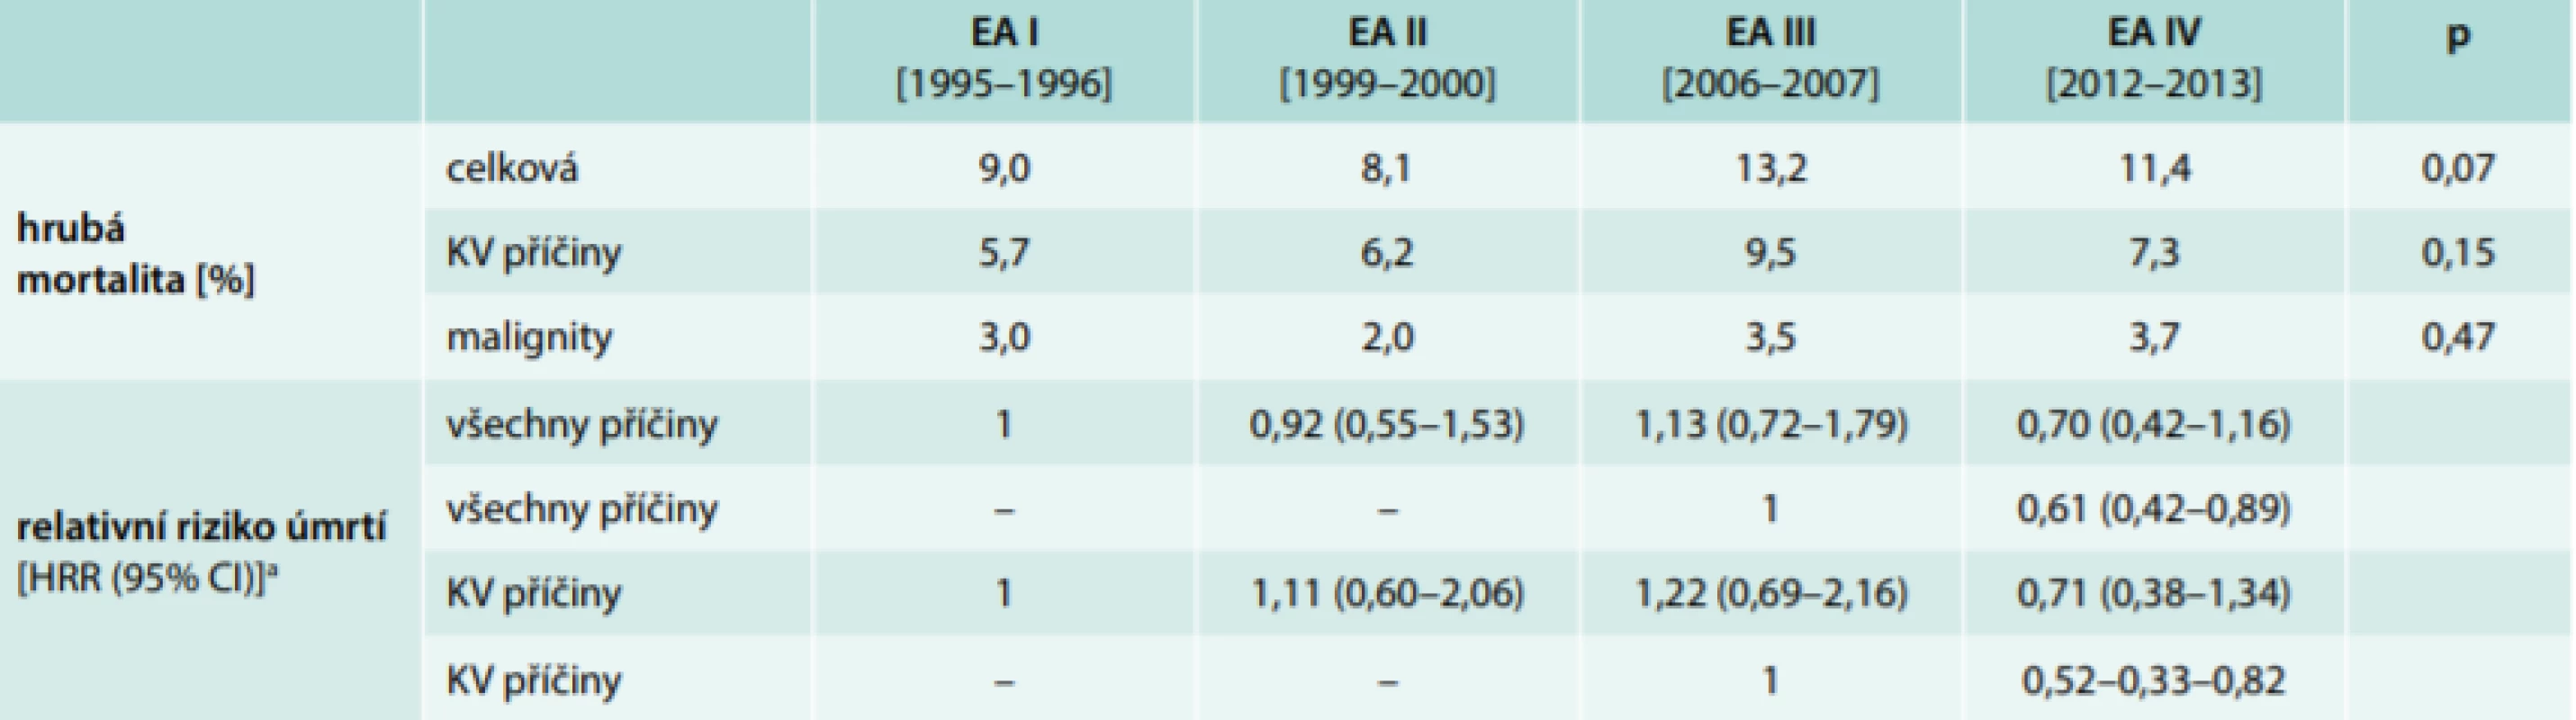 Mortalita u pacientů kohort EUROASPIRE I-IV [%]